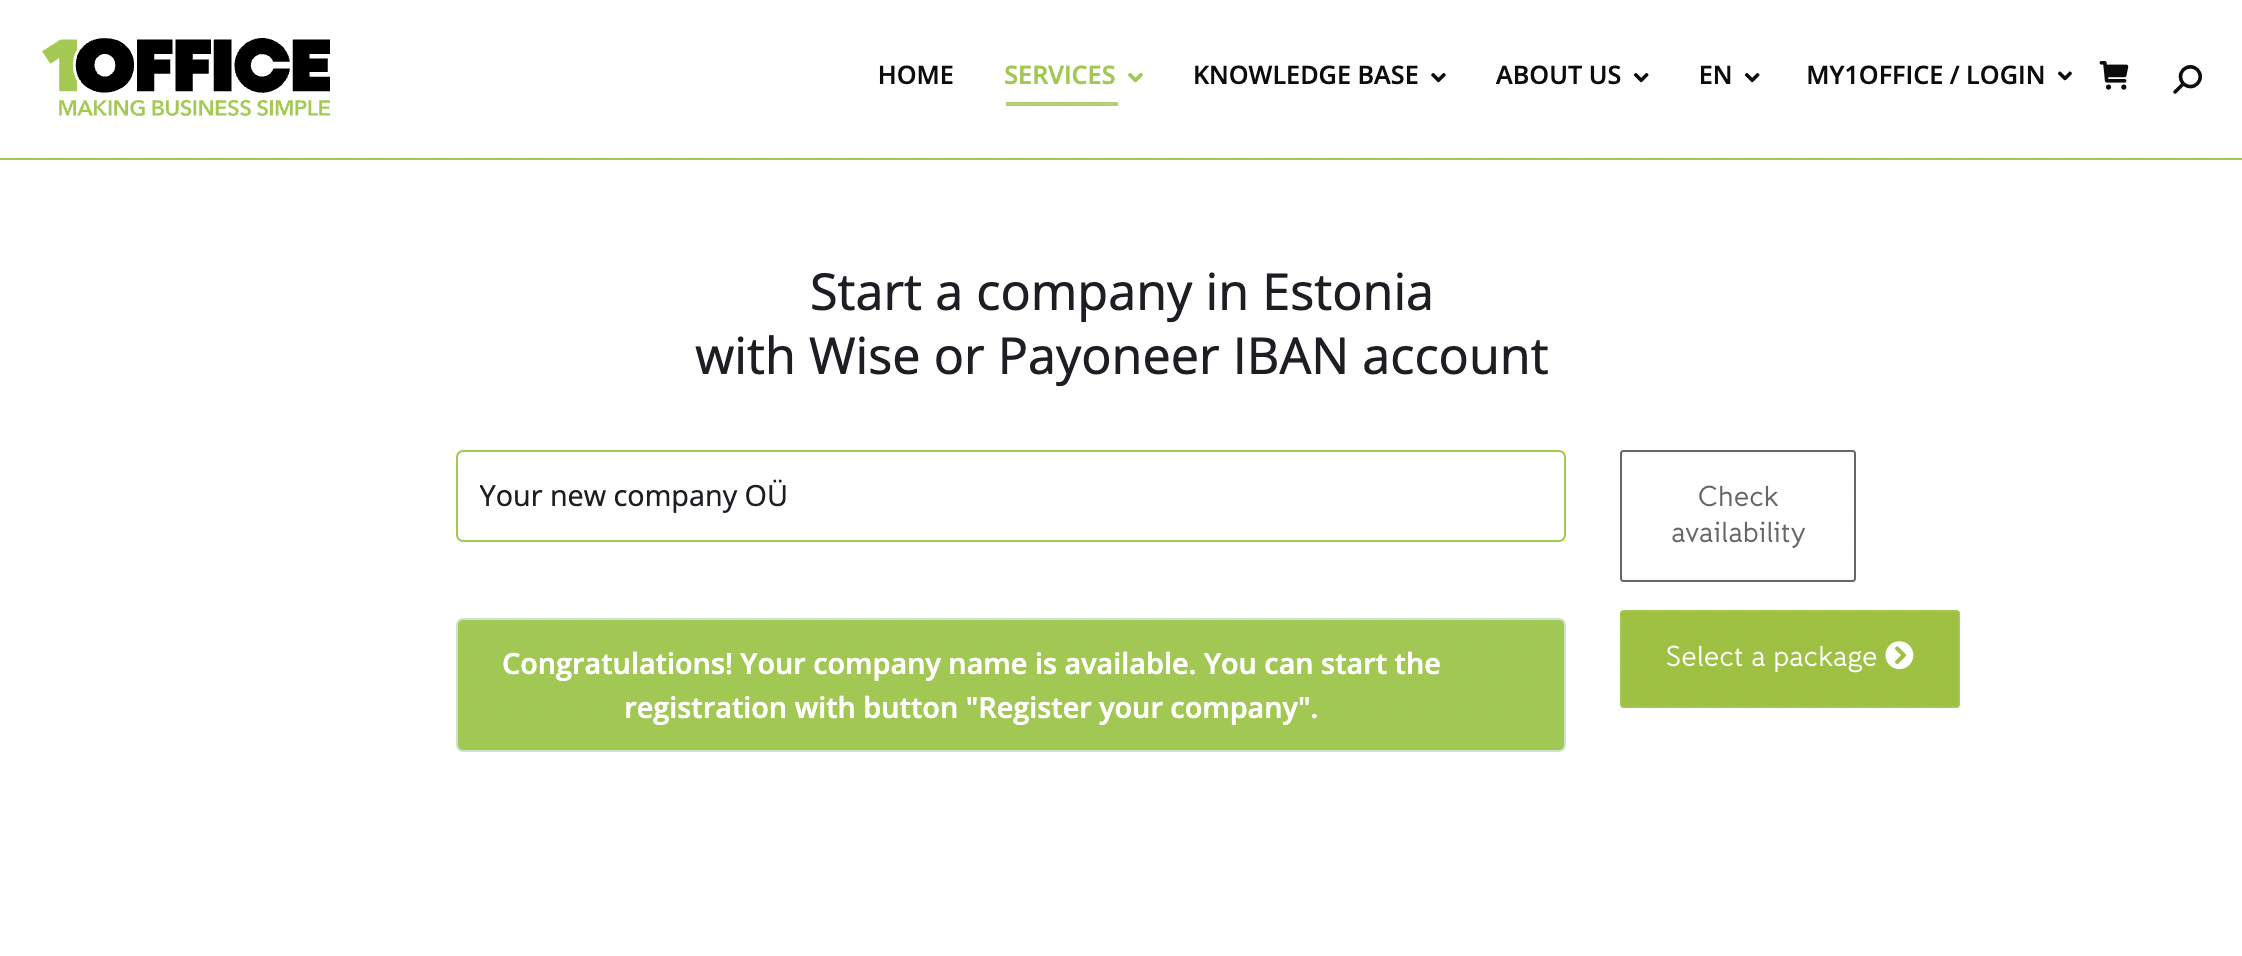 Company registration in Estonia step 1